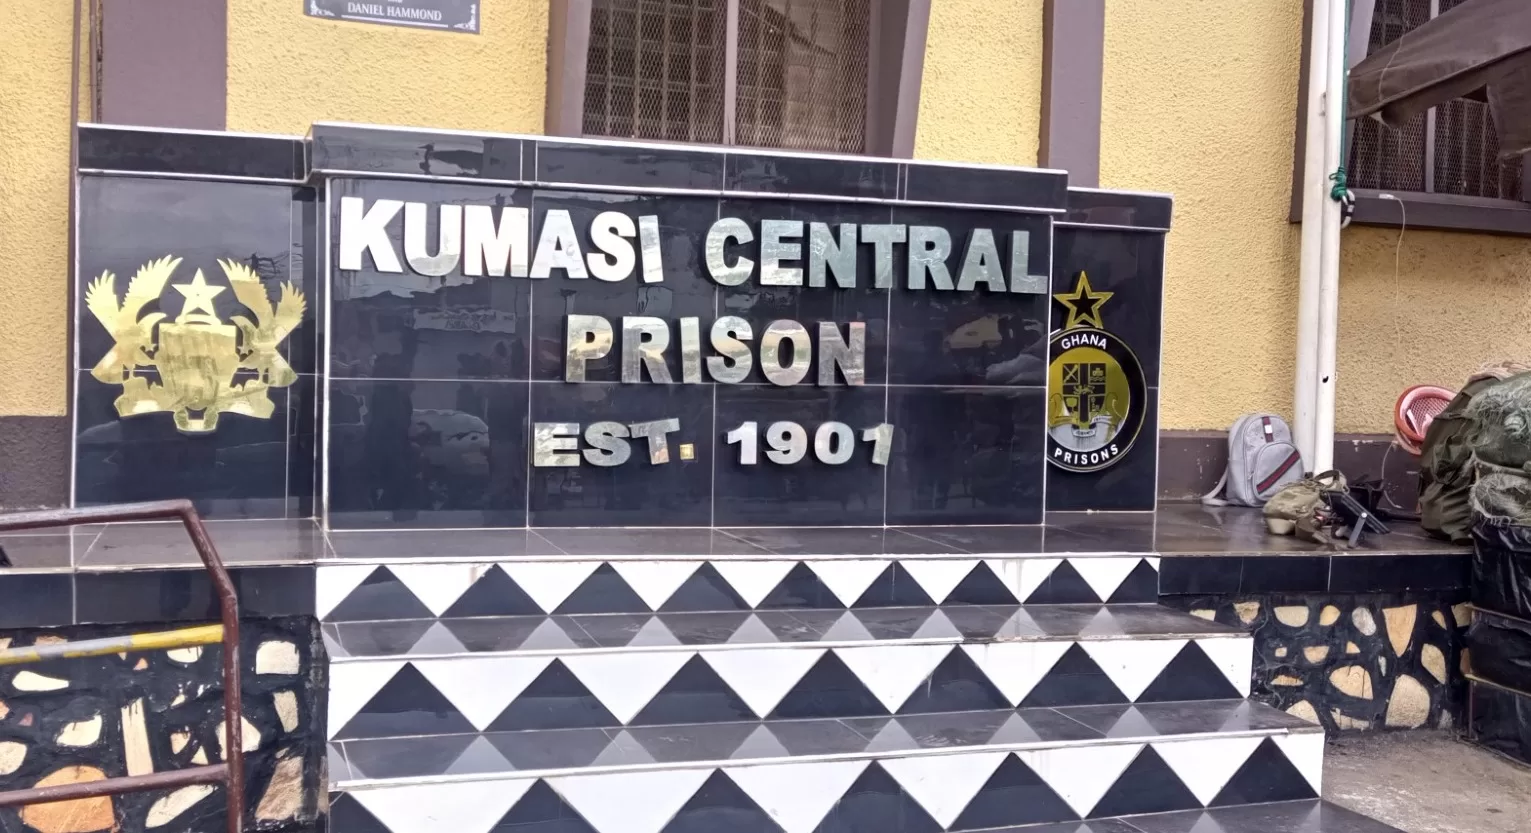 Kumasi Central Prison triple its capacity to 1800 inmates